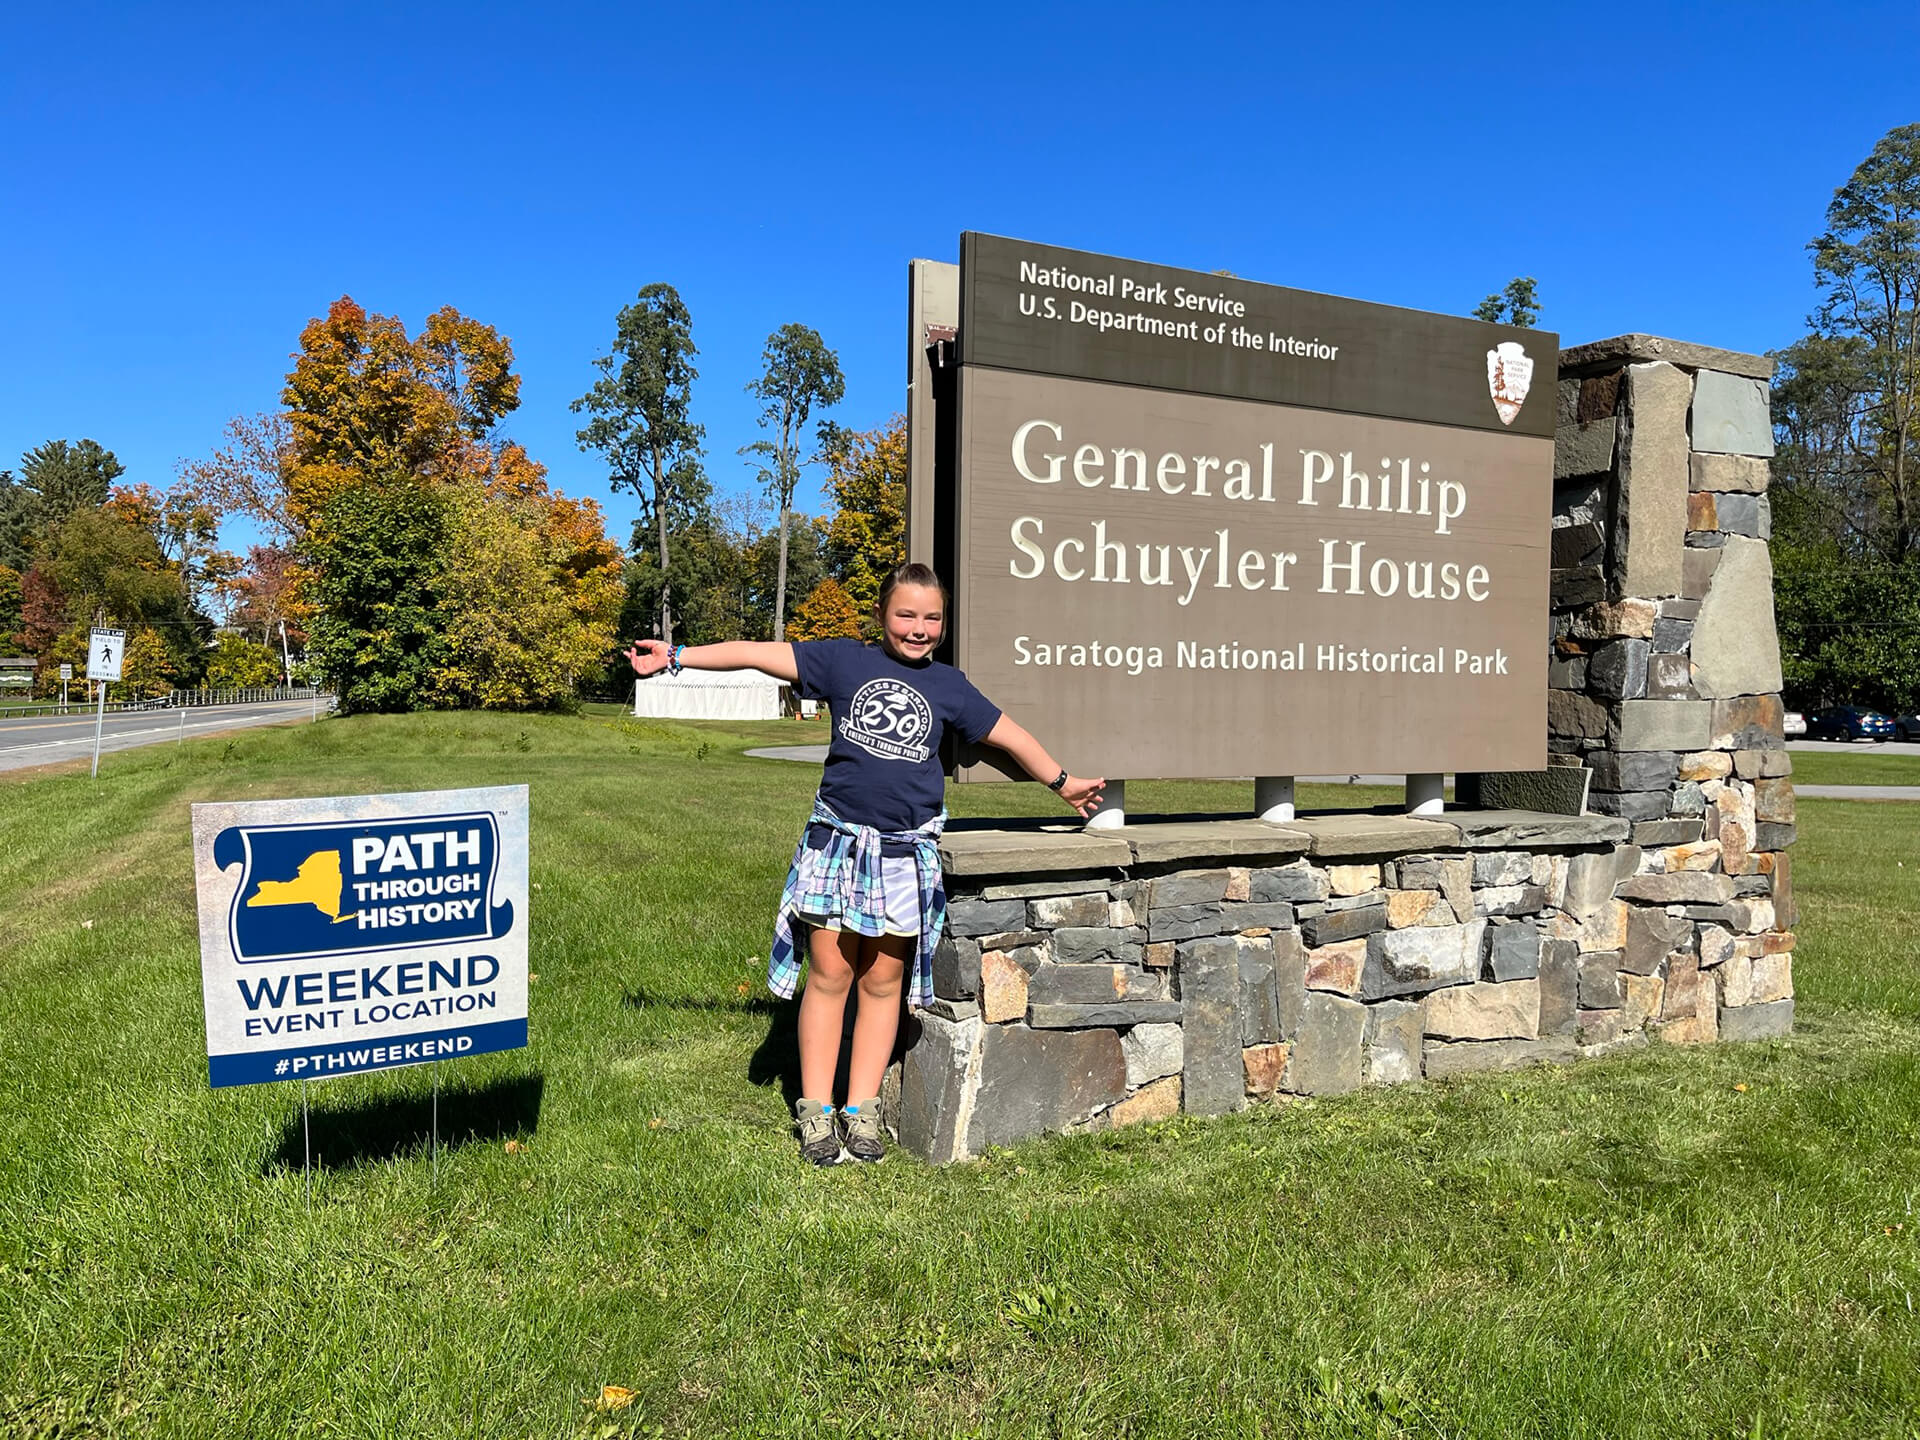 General Philip Schuyler House: Saratoga National Historical Park